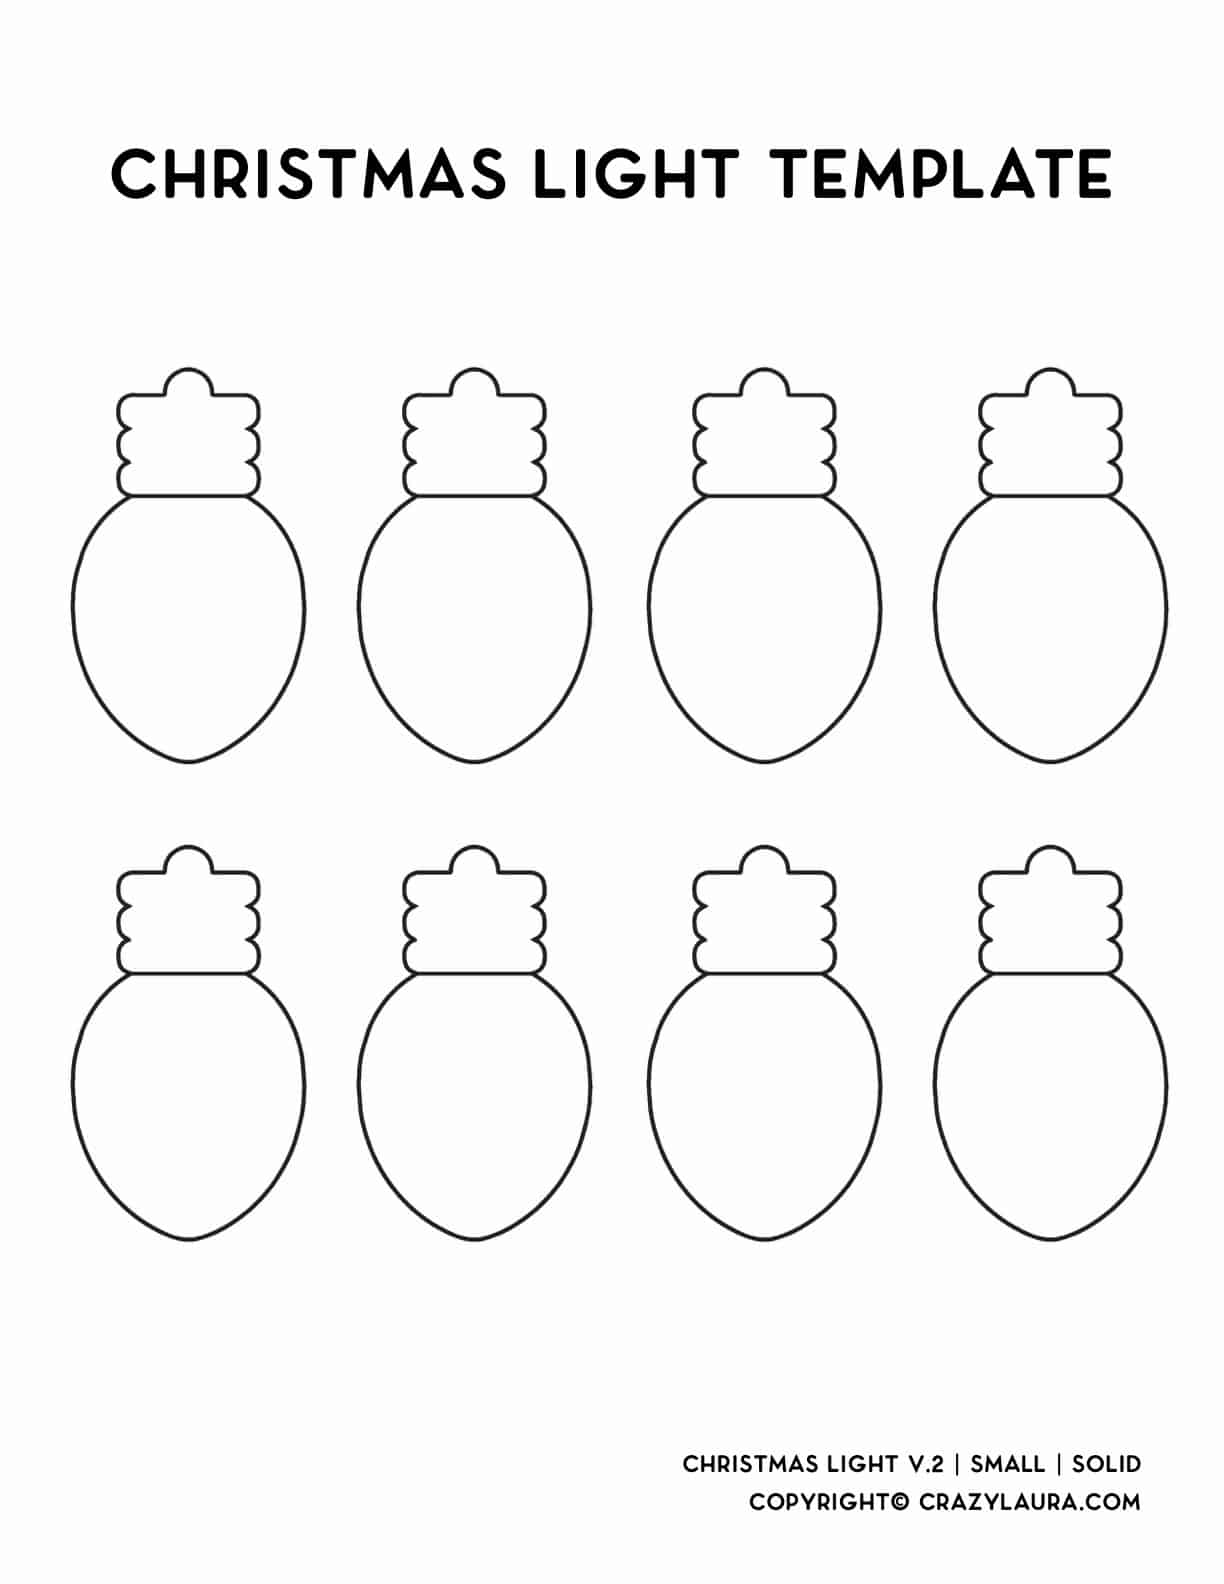 small garland template for christmas lights